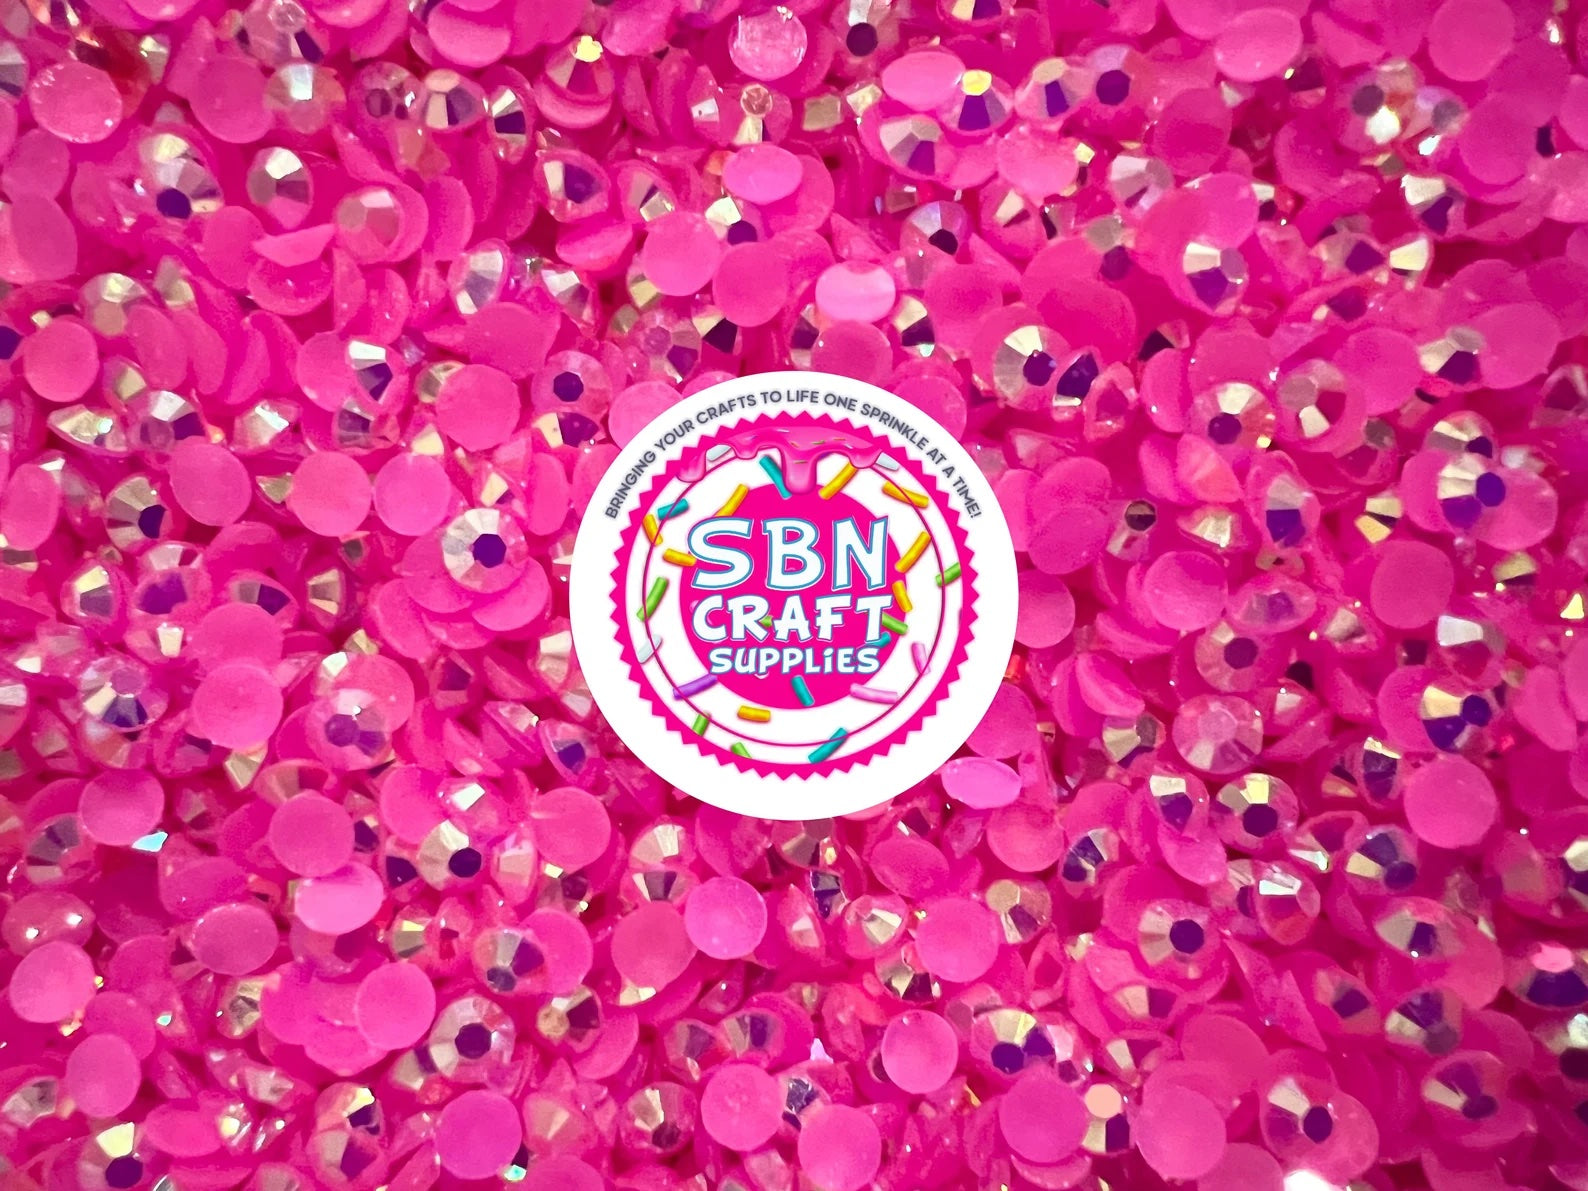 Seamless Bling Pink Rhinestones Tumbler Graphic by Digital Nest Egg ·  Creative Fabrica